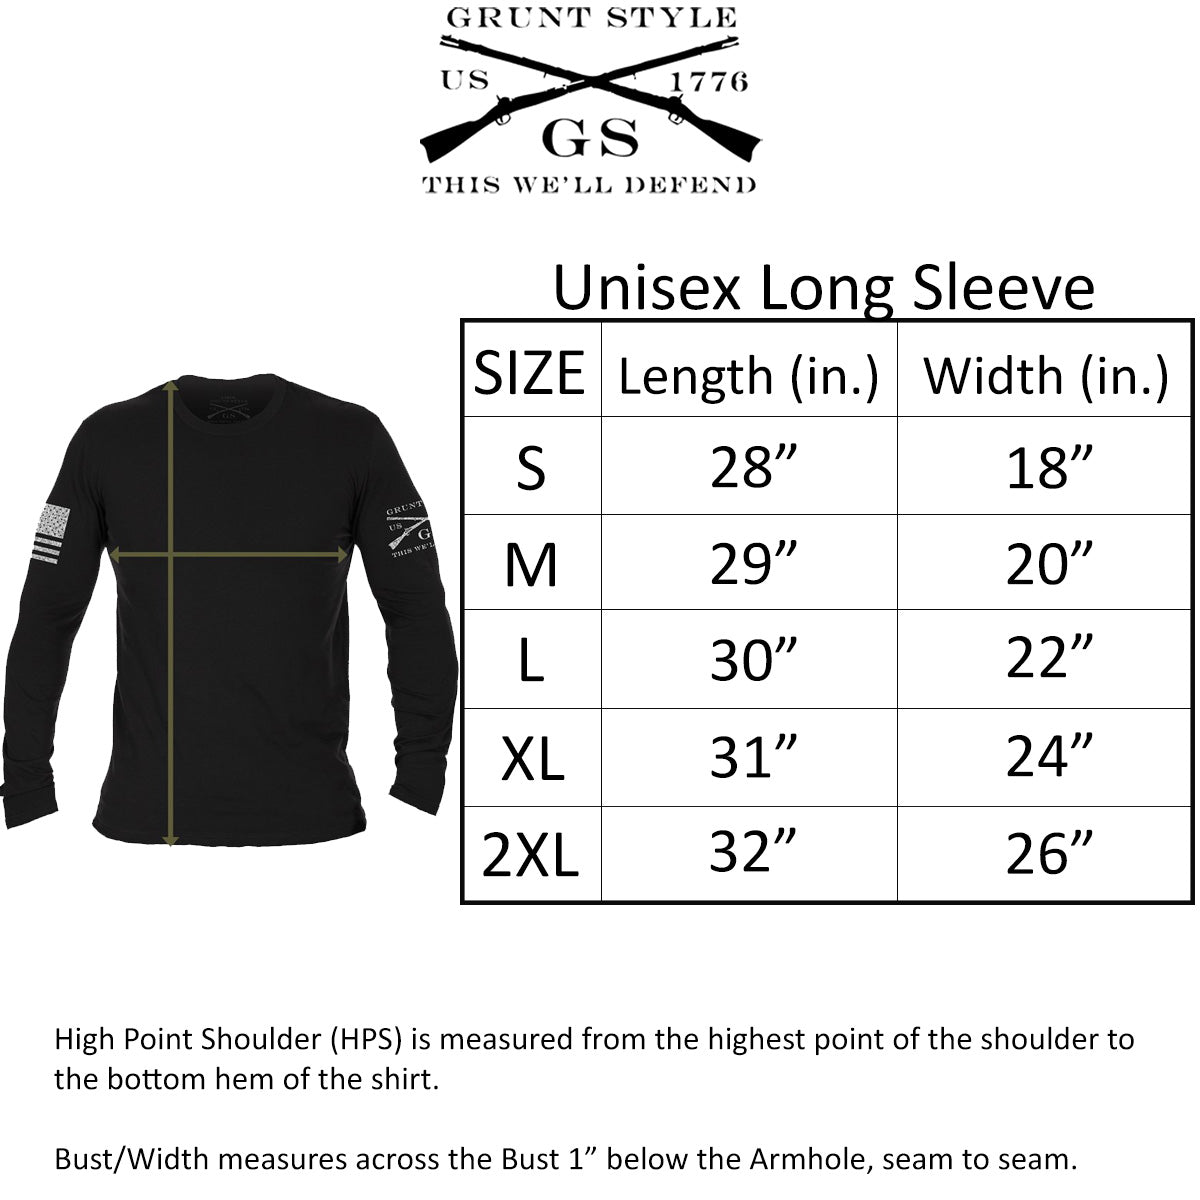 Grunt Style Super Patriot 2.0 Long Sleeve T-Shirt - Black Grunt Style